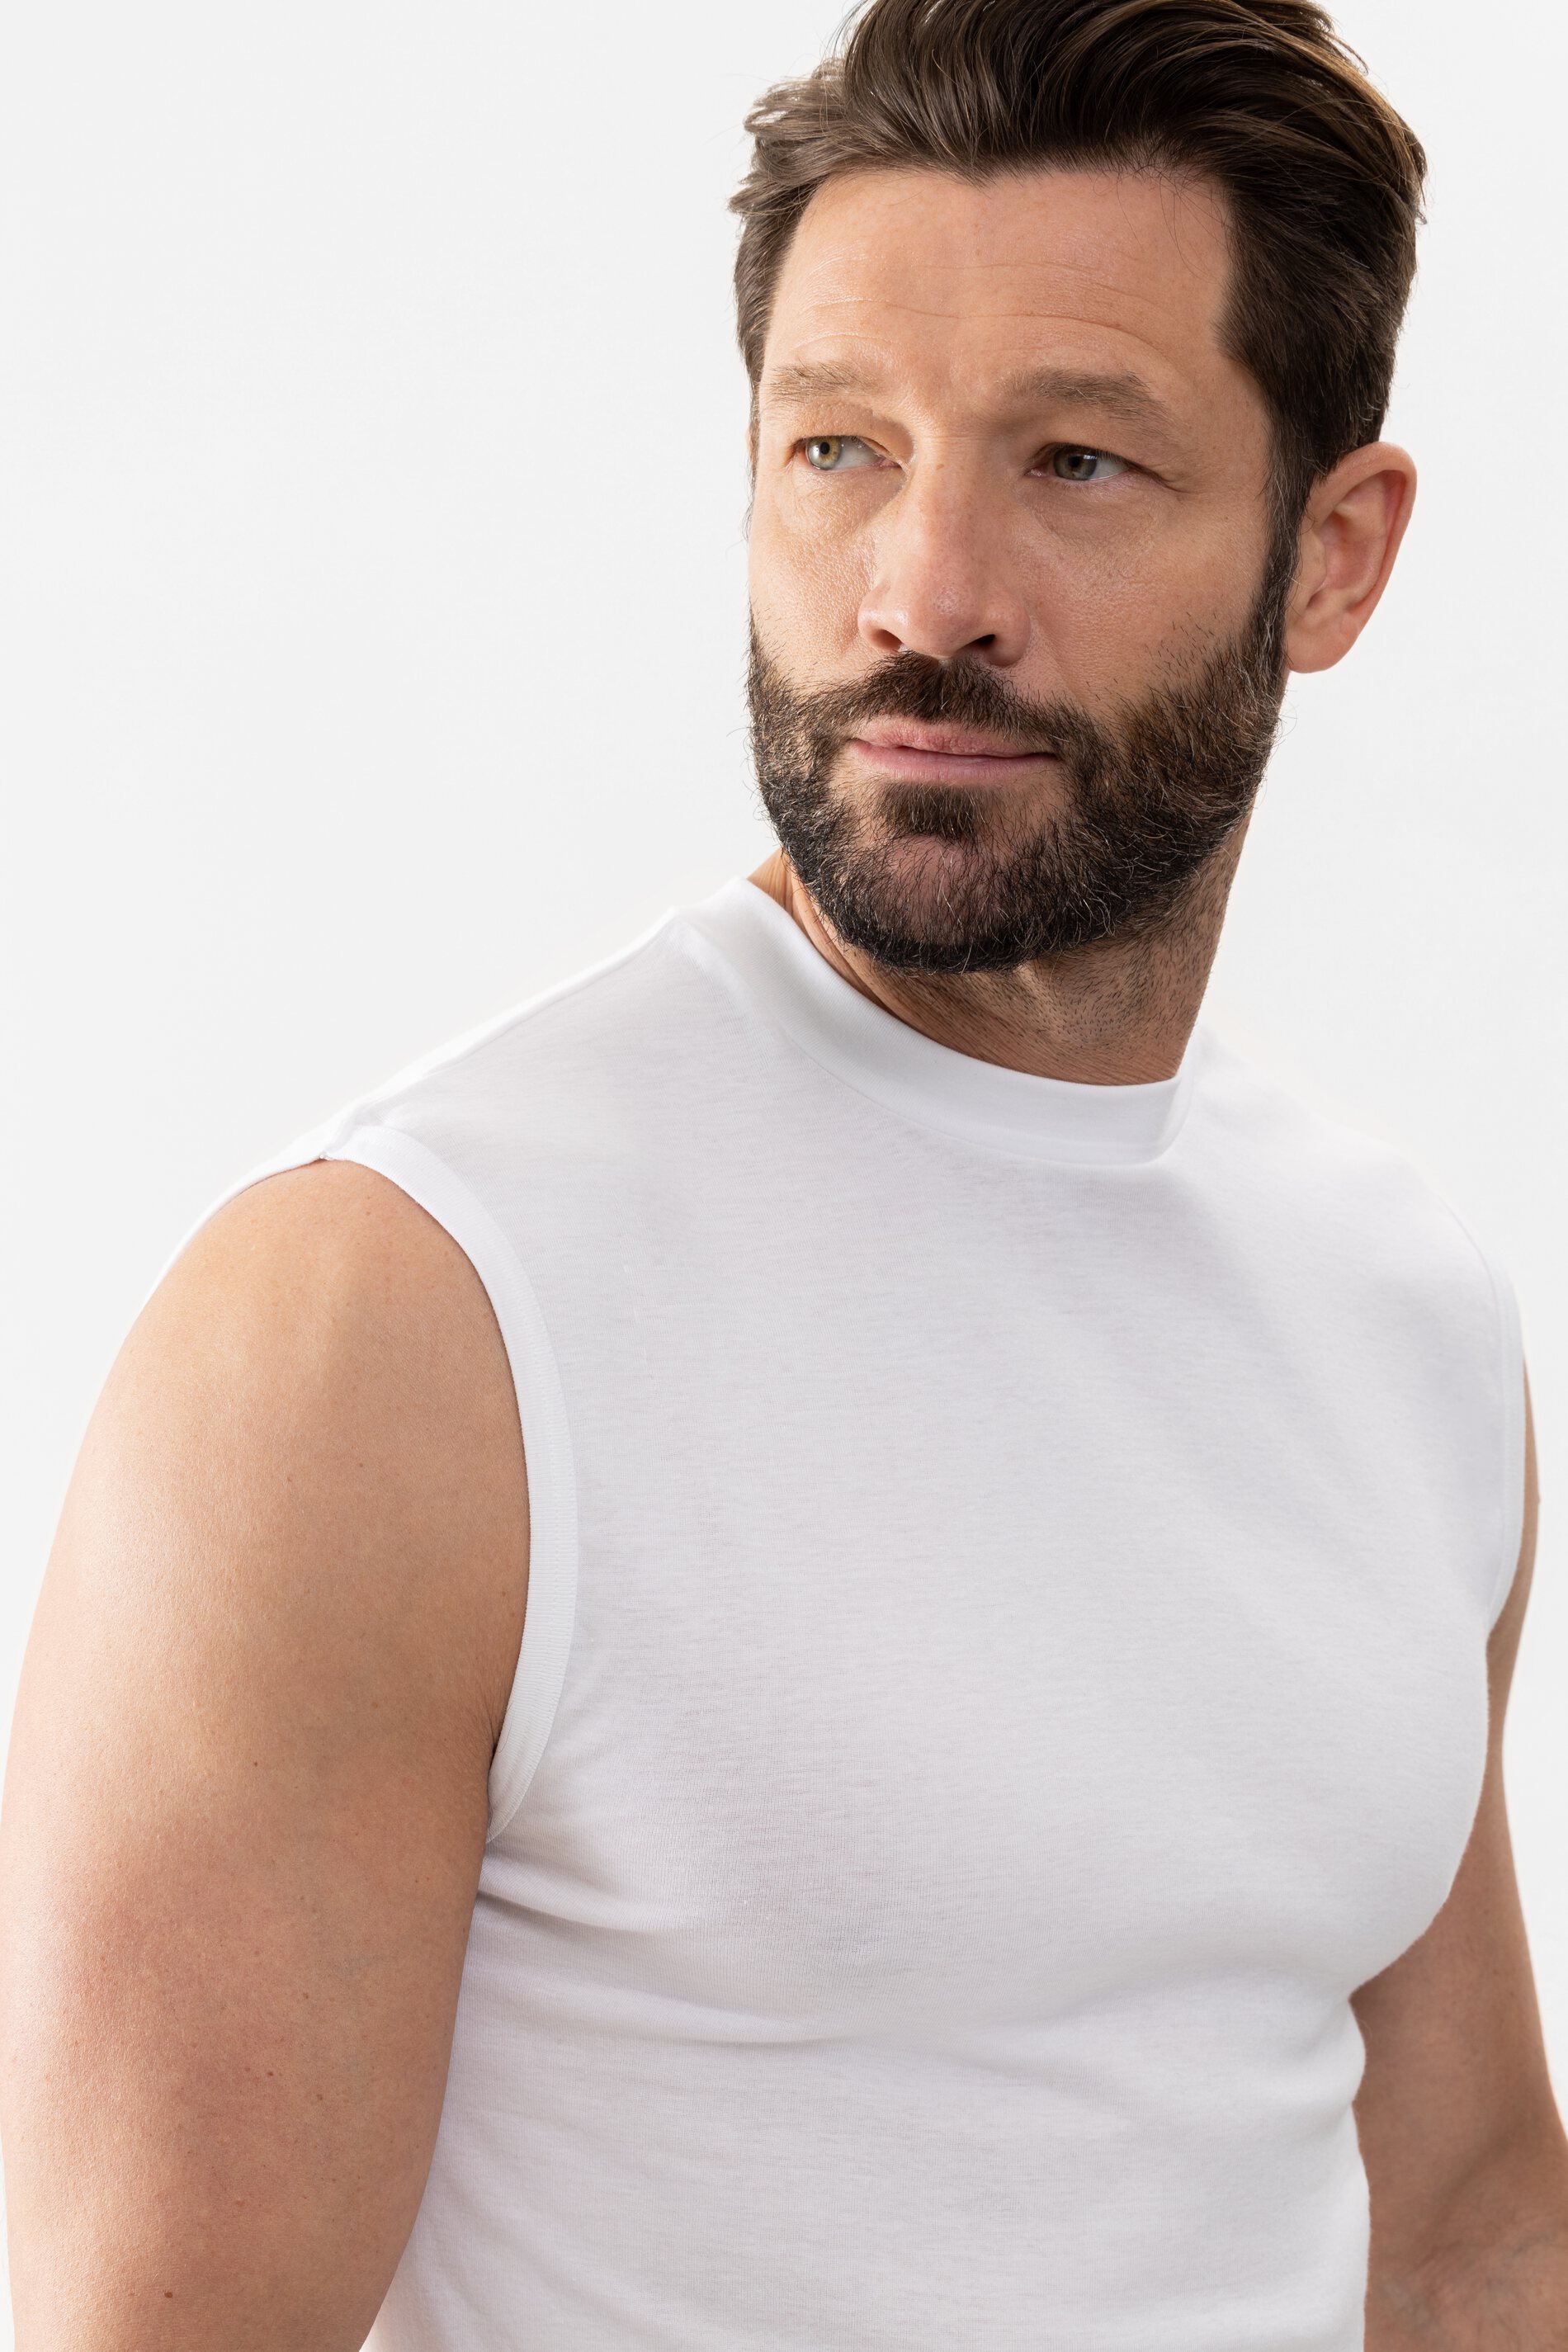 Muskel-Shirt Weiss Serie Noblesse Detailansicht 01 | mey®